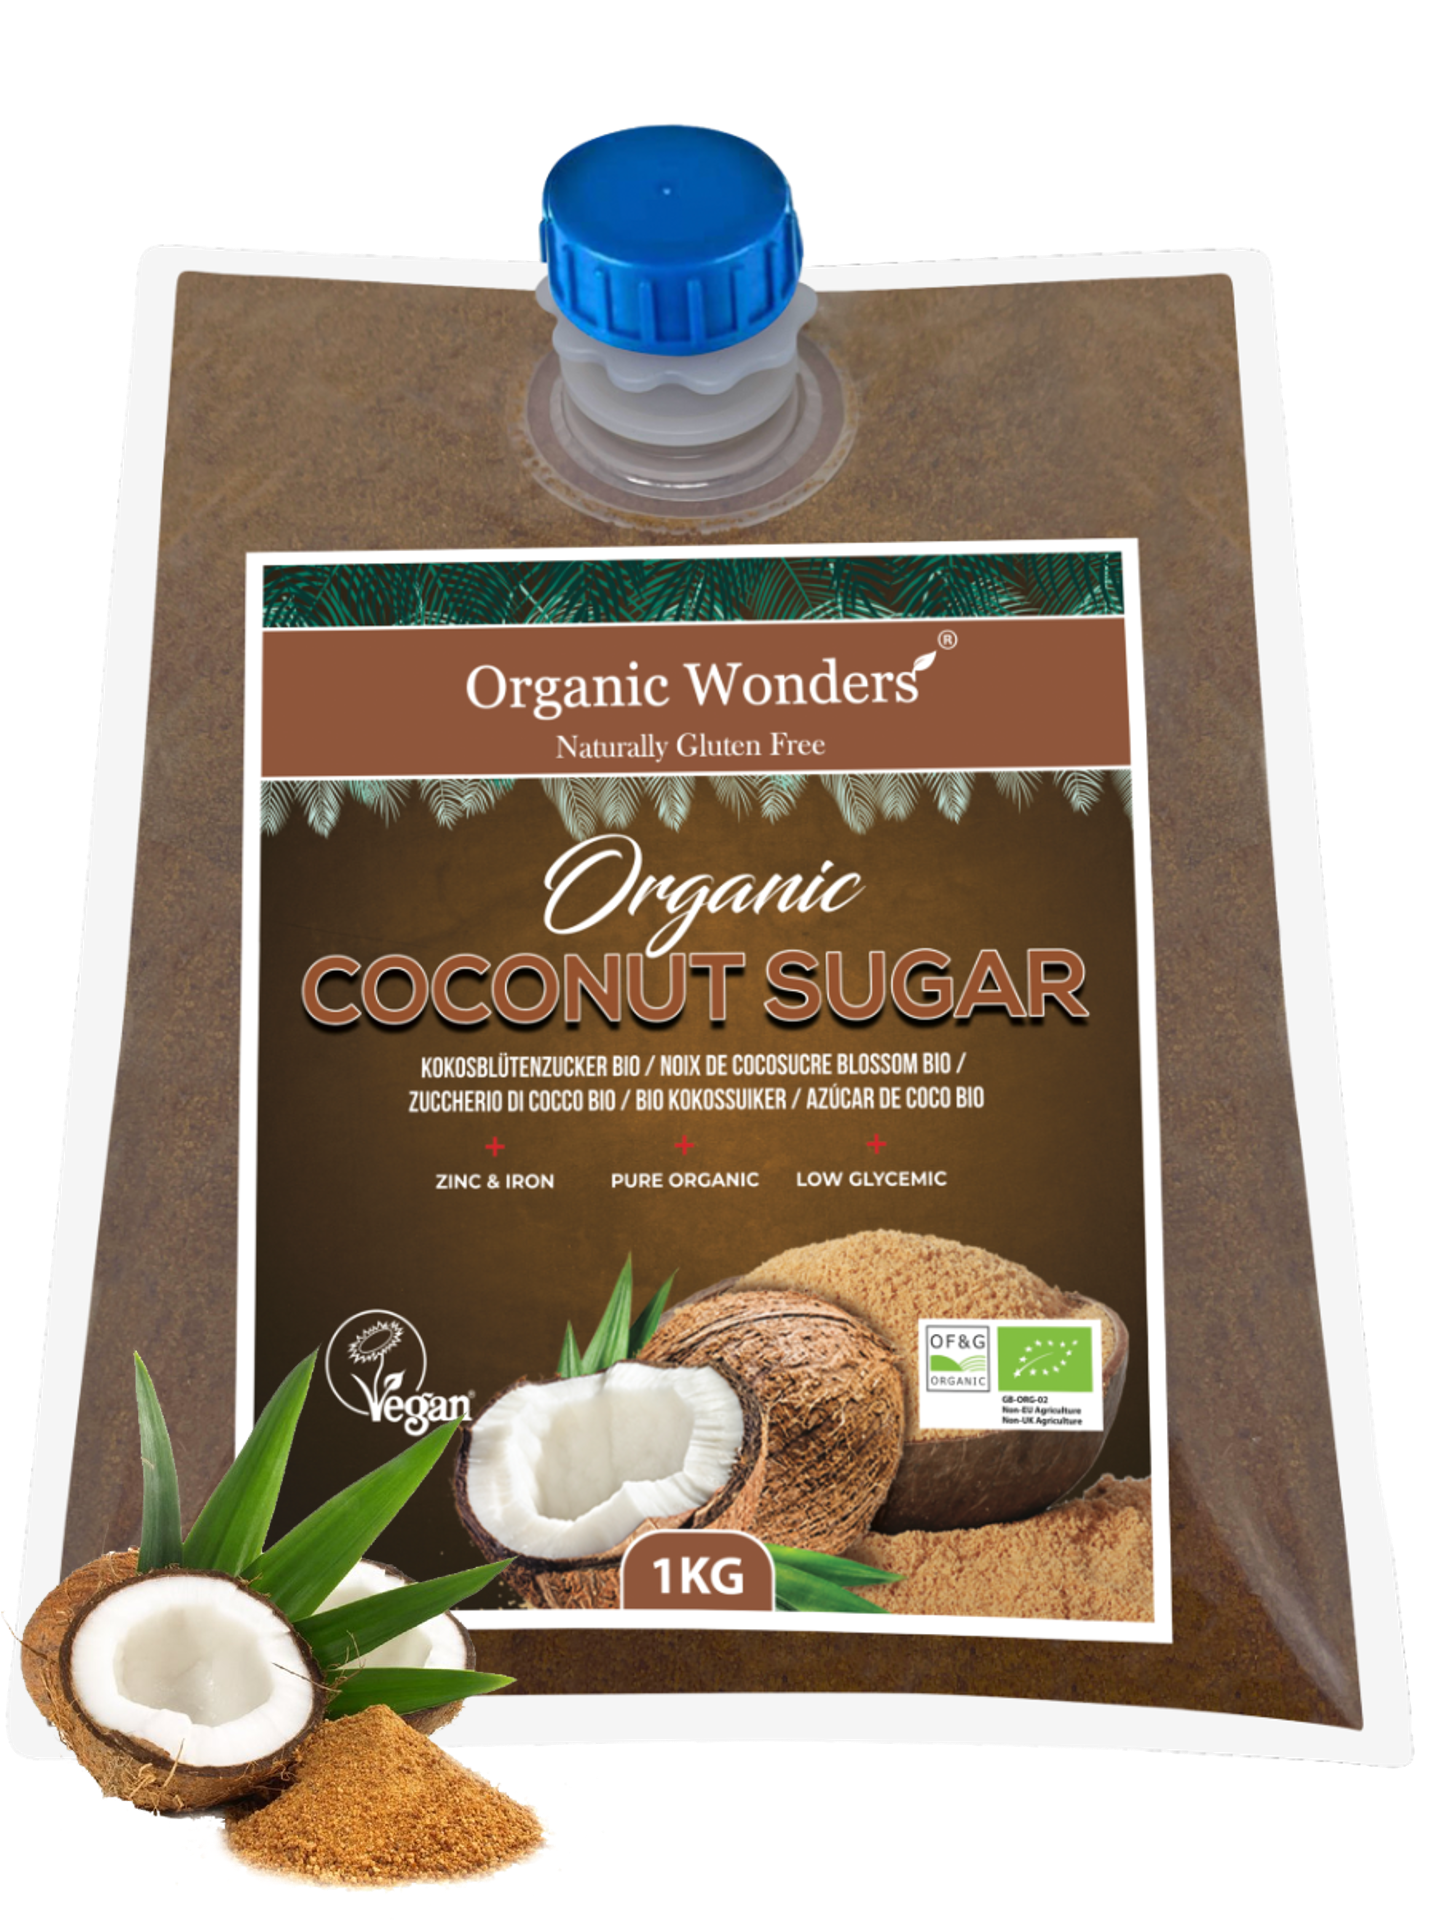 Organic Coconut Sugar 1kg | Organic Wonders UK